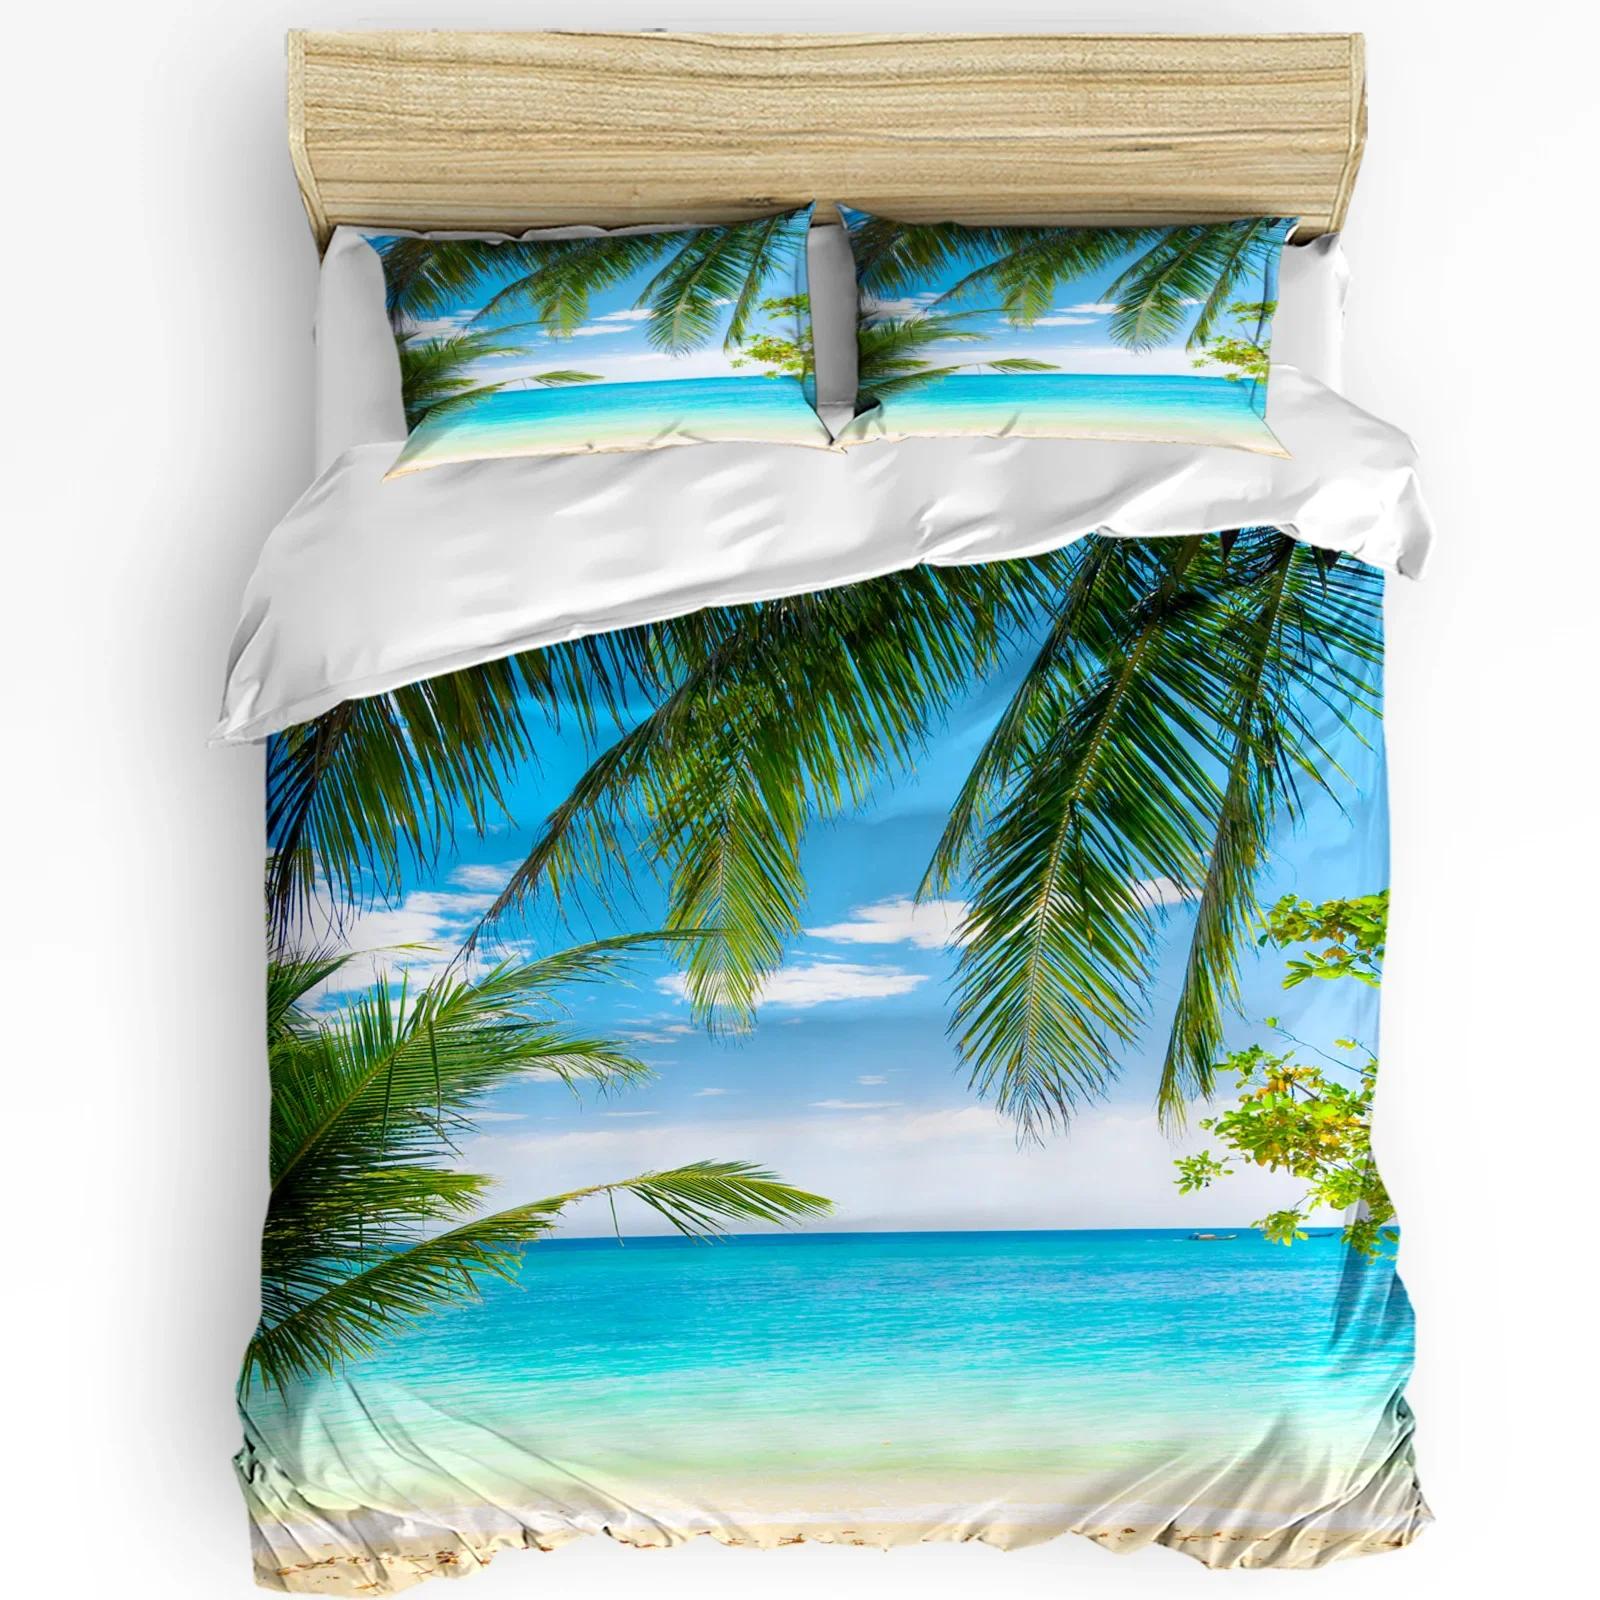 Beach Green Coconut Tree Sky Clouds Bedding Set 3pcs Duvet Cover Pillowcase Kids Adult Quilt Cover Double Bed Set Ho